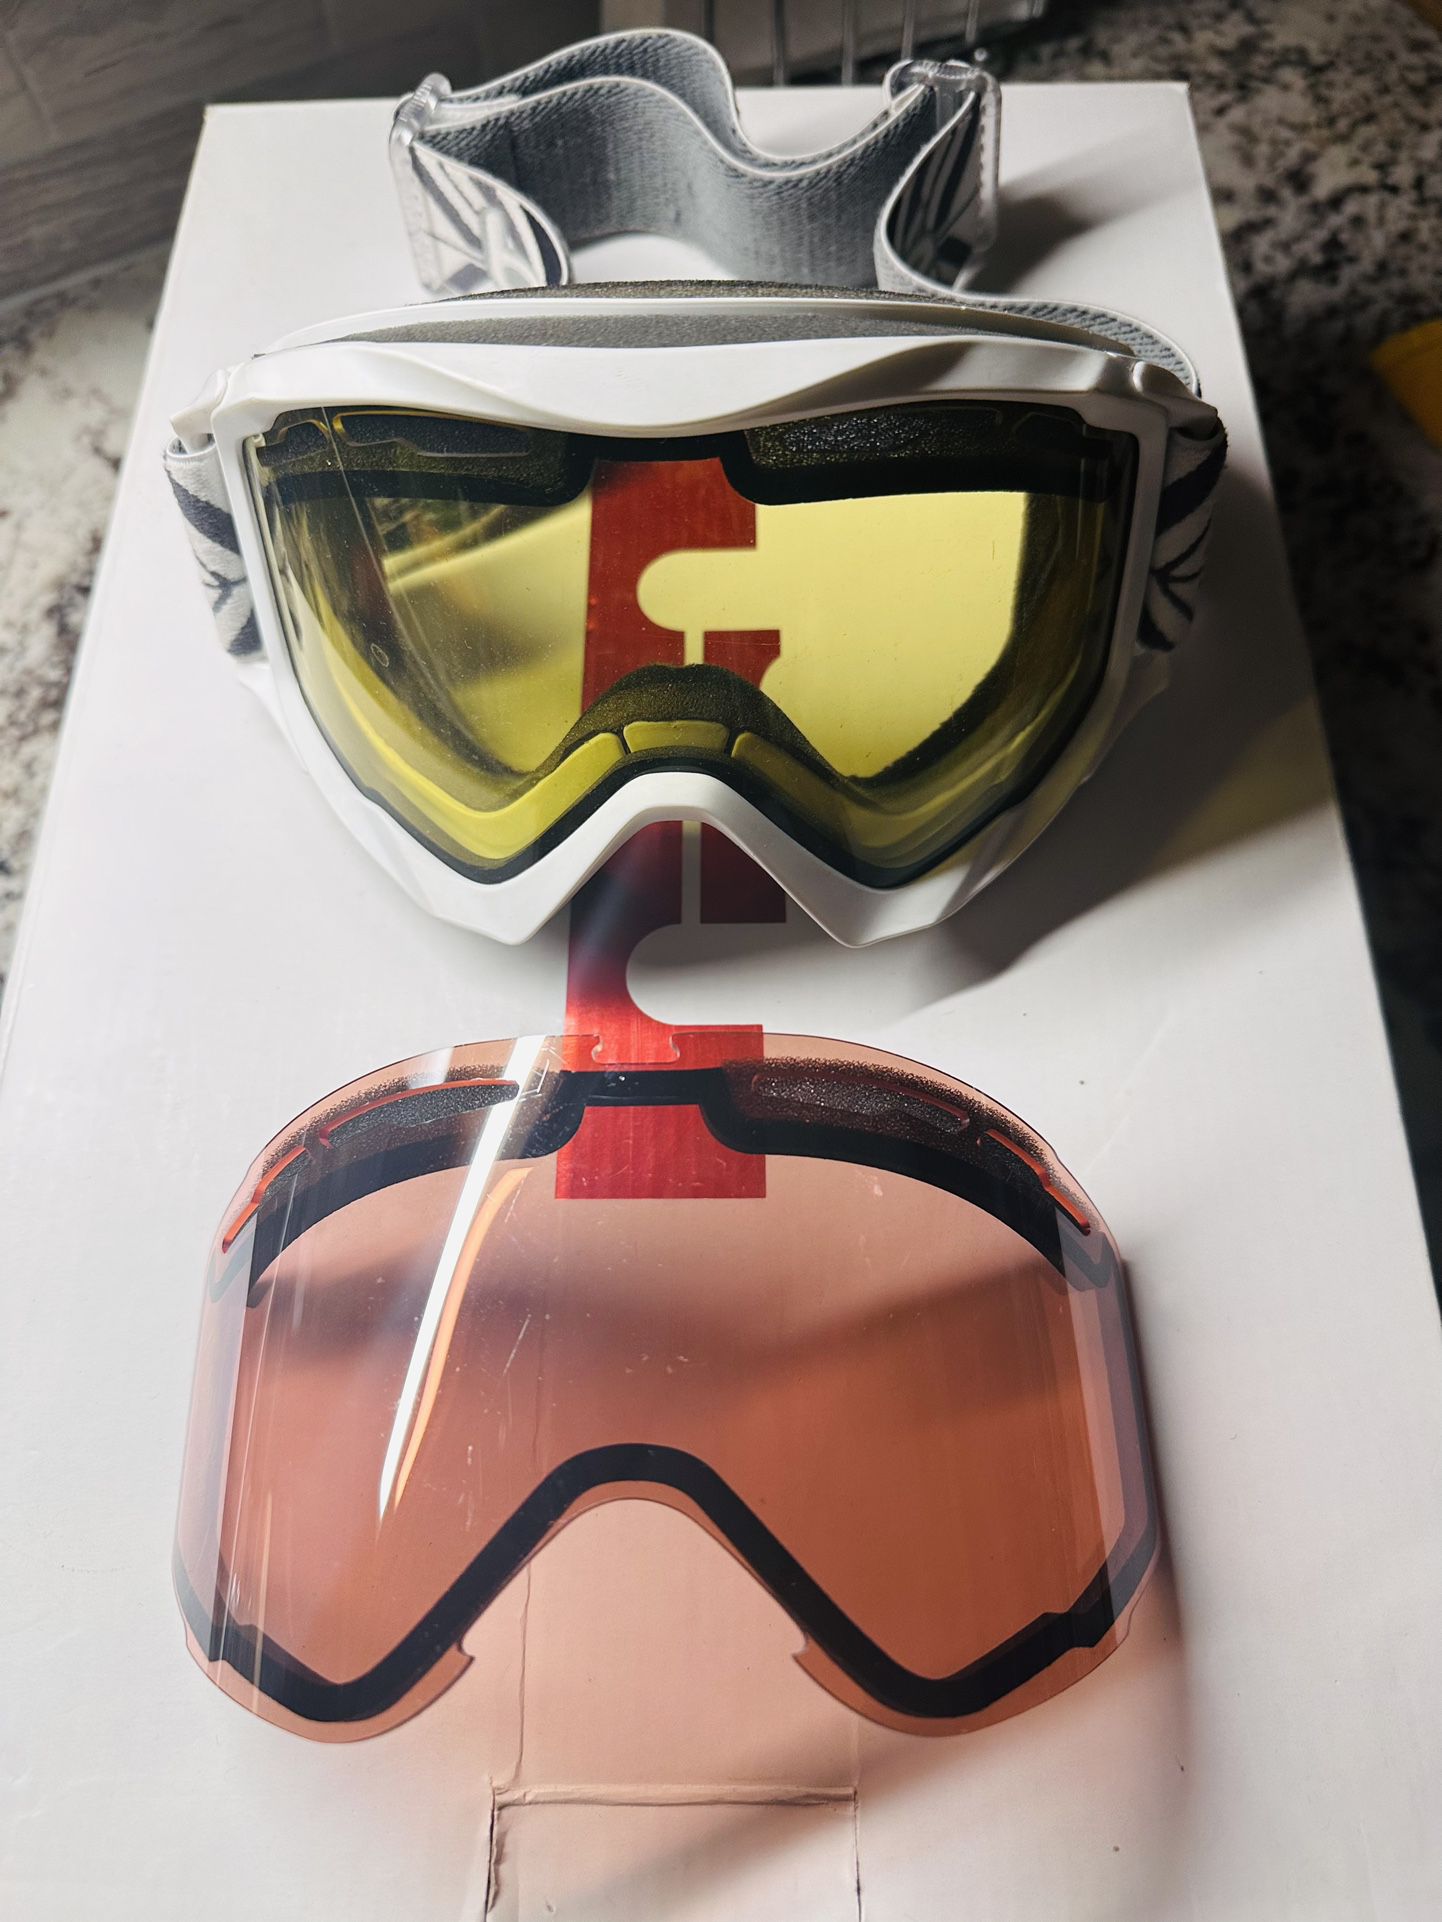 Bolls Ski Goggles 